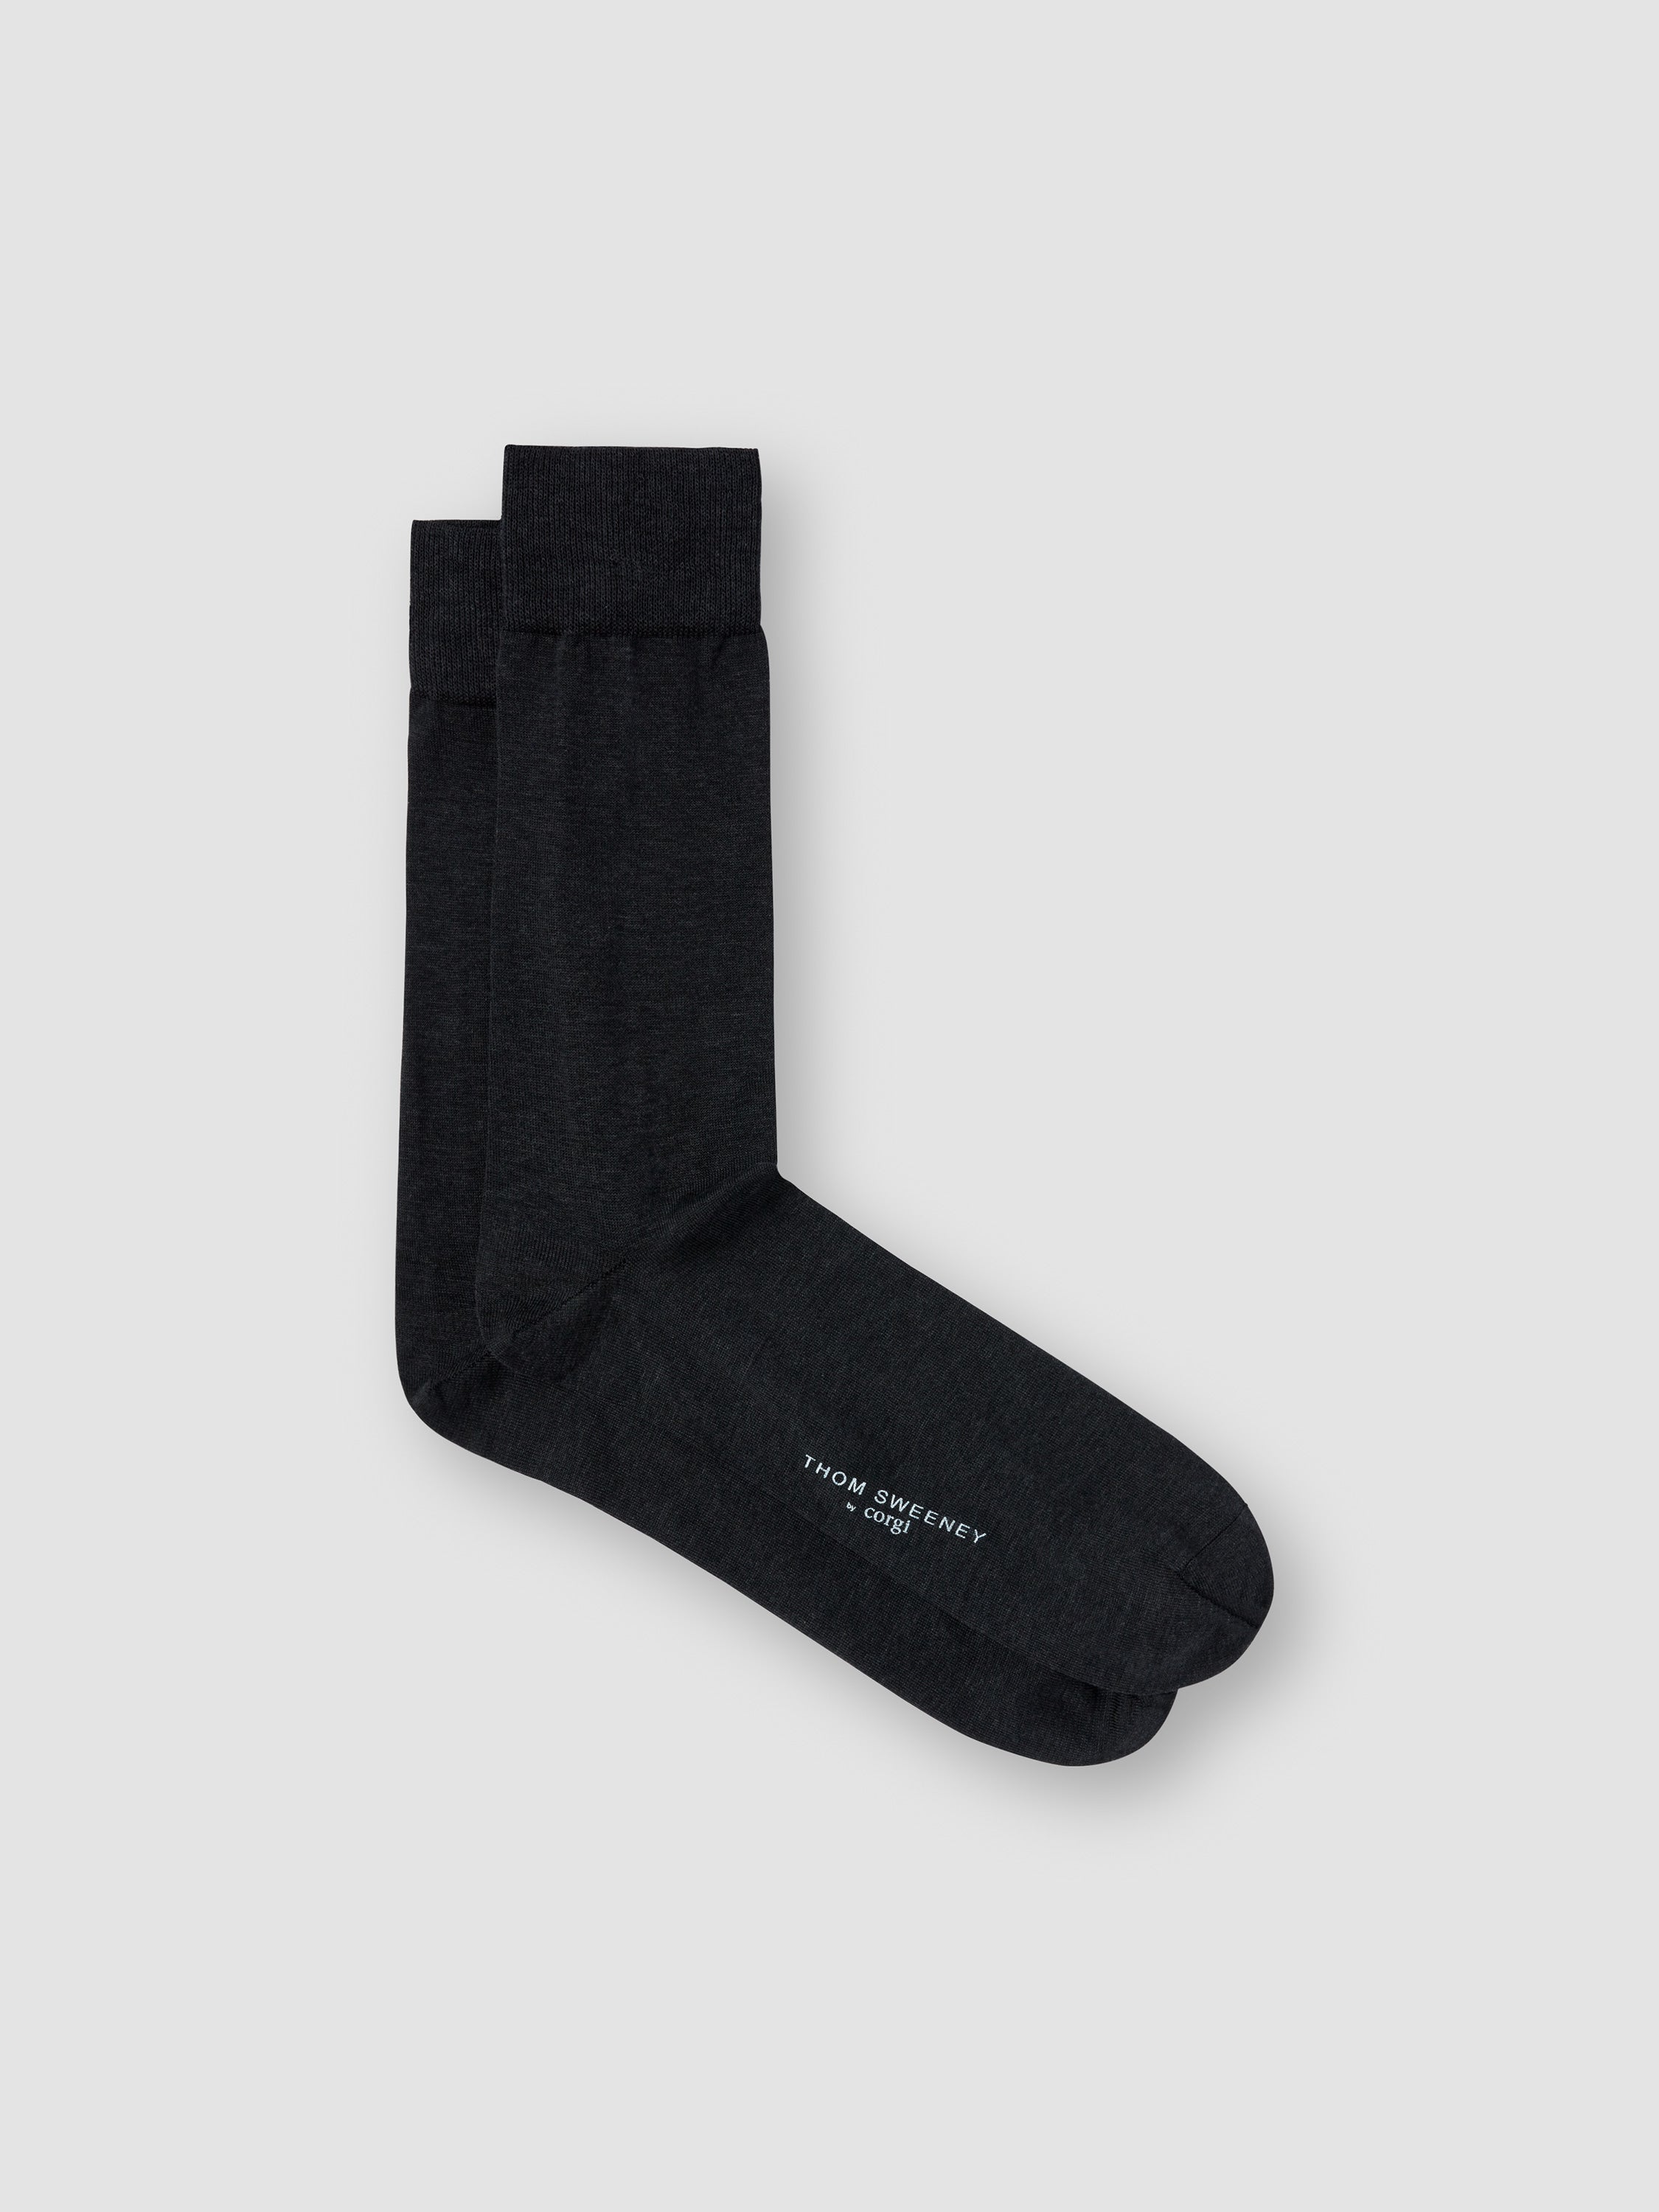 Plain Dress Sock Grey Product Image